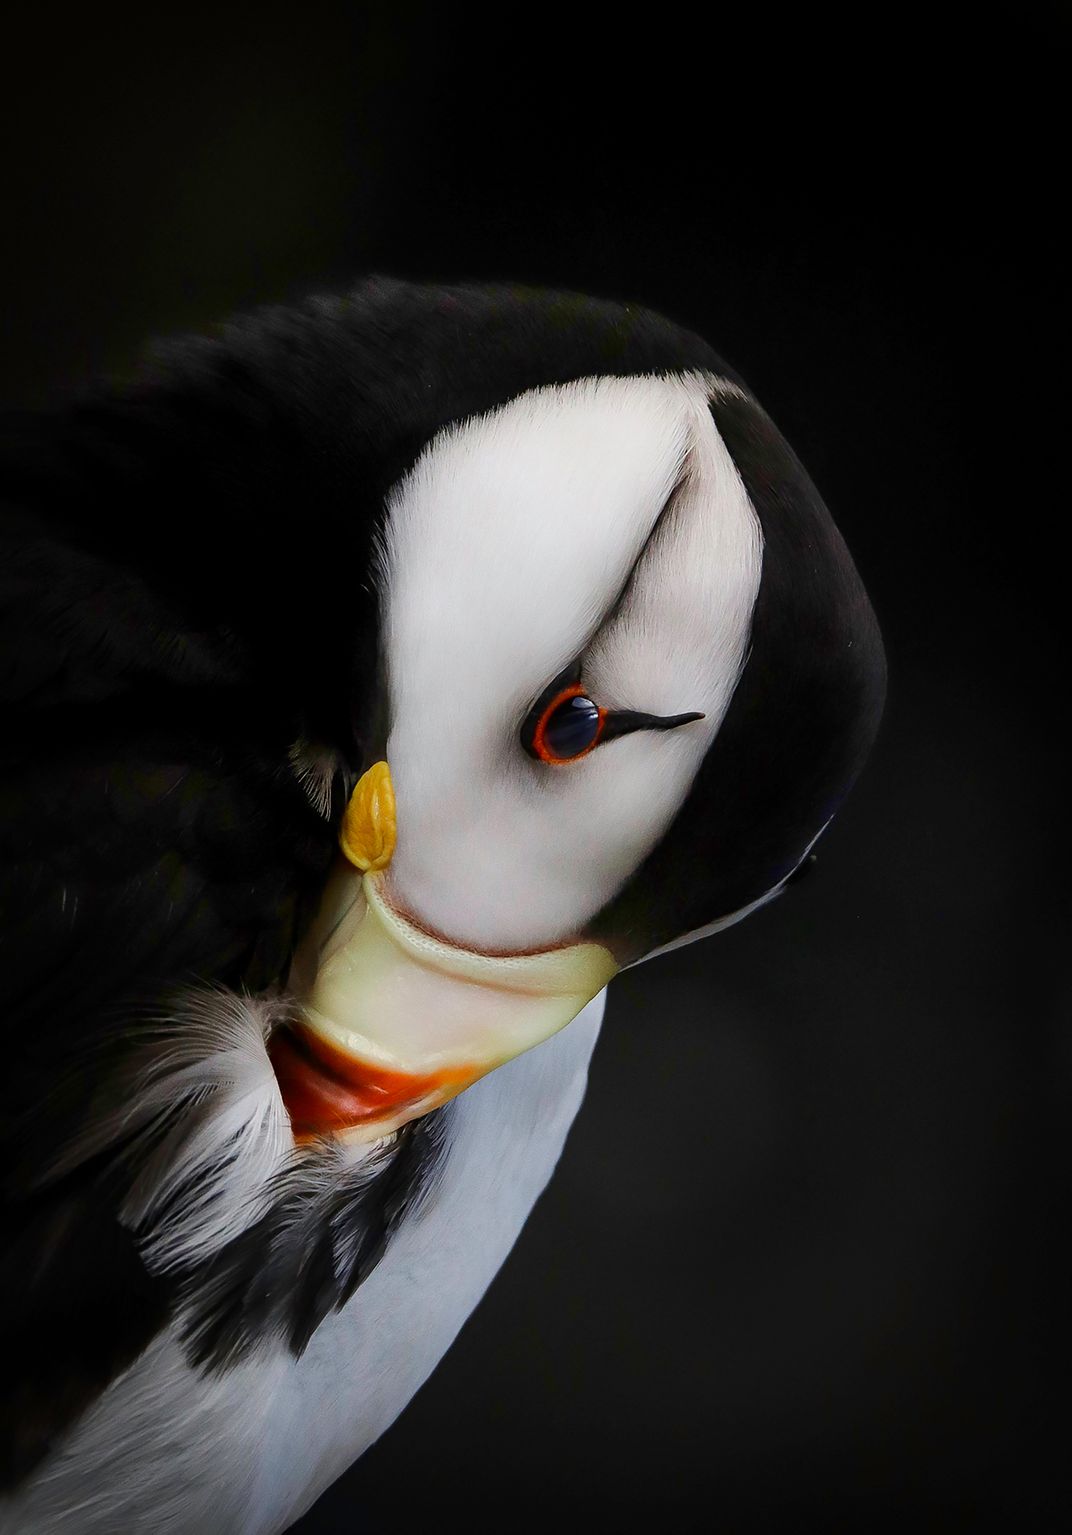 Audubon Photography Award Winners Show the Breathtaking Beauty of Wild Birds